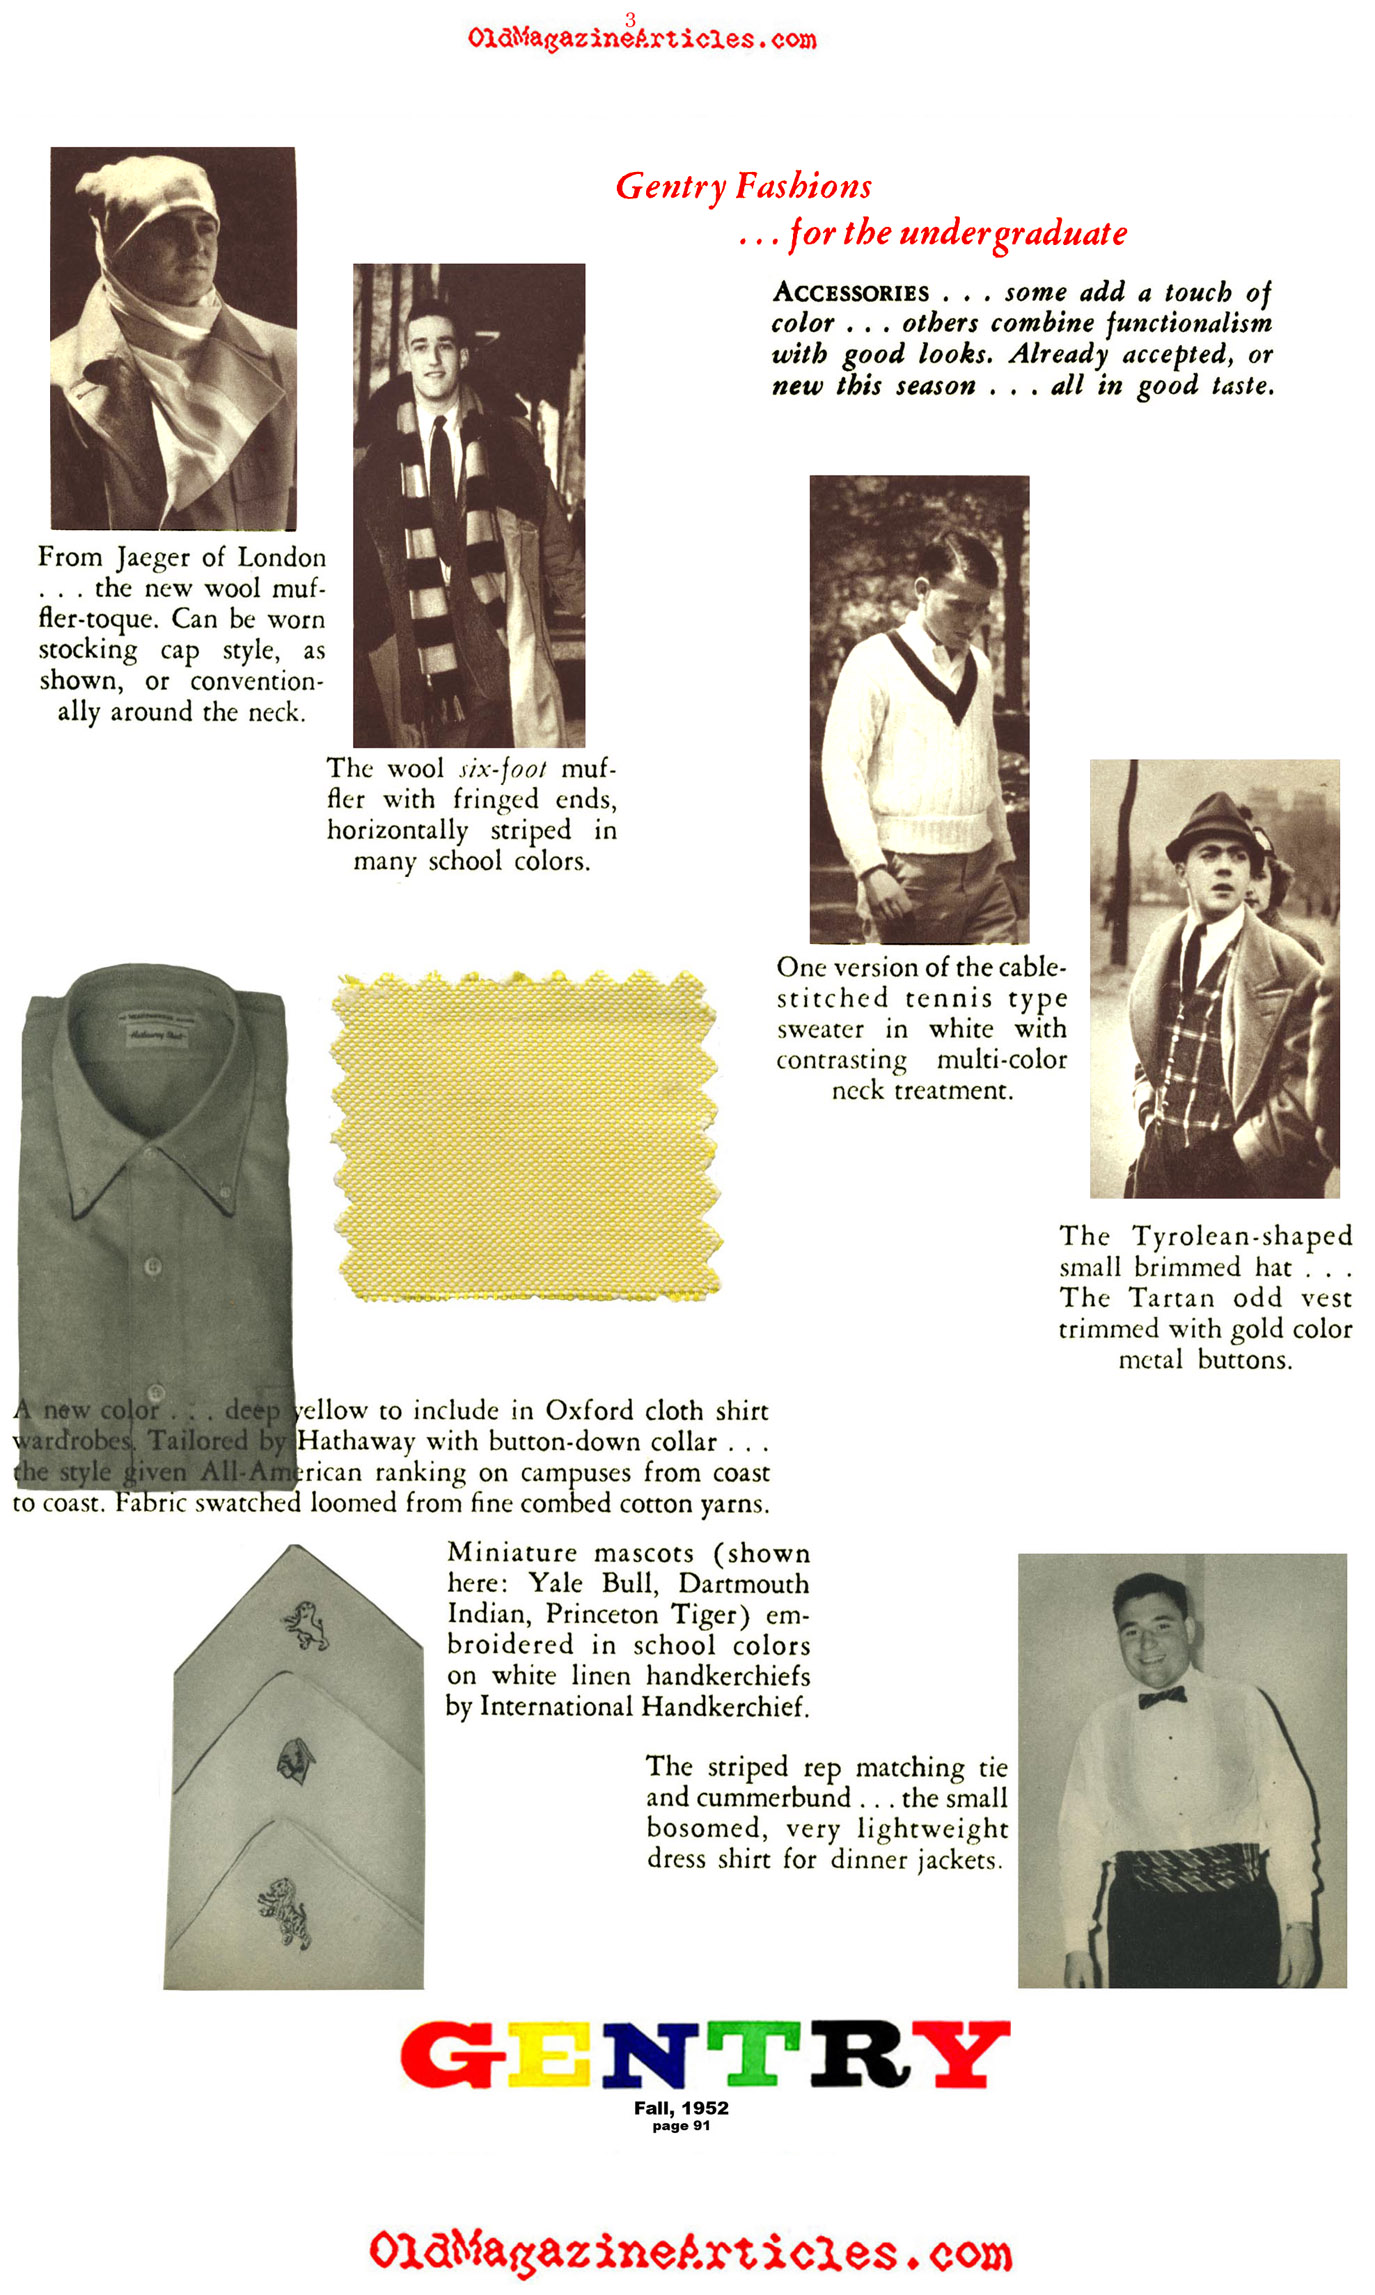 1952 College Fashions (Gentry Magazine, 1952)